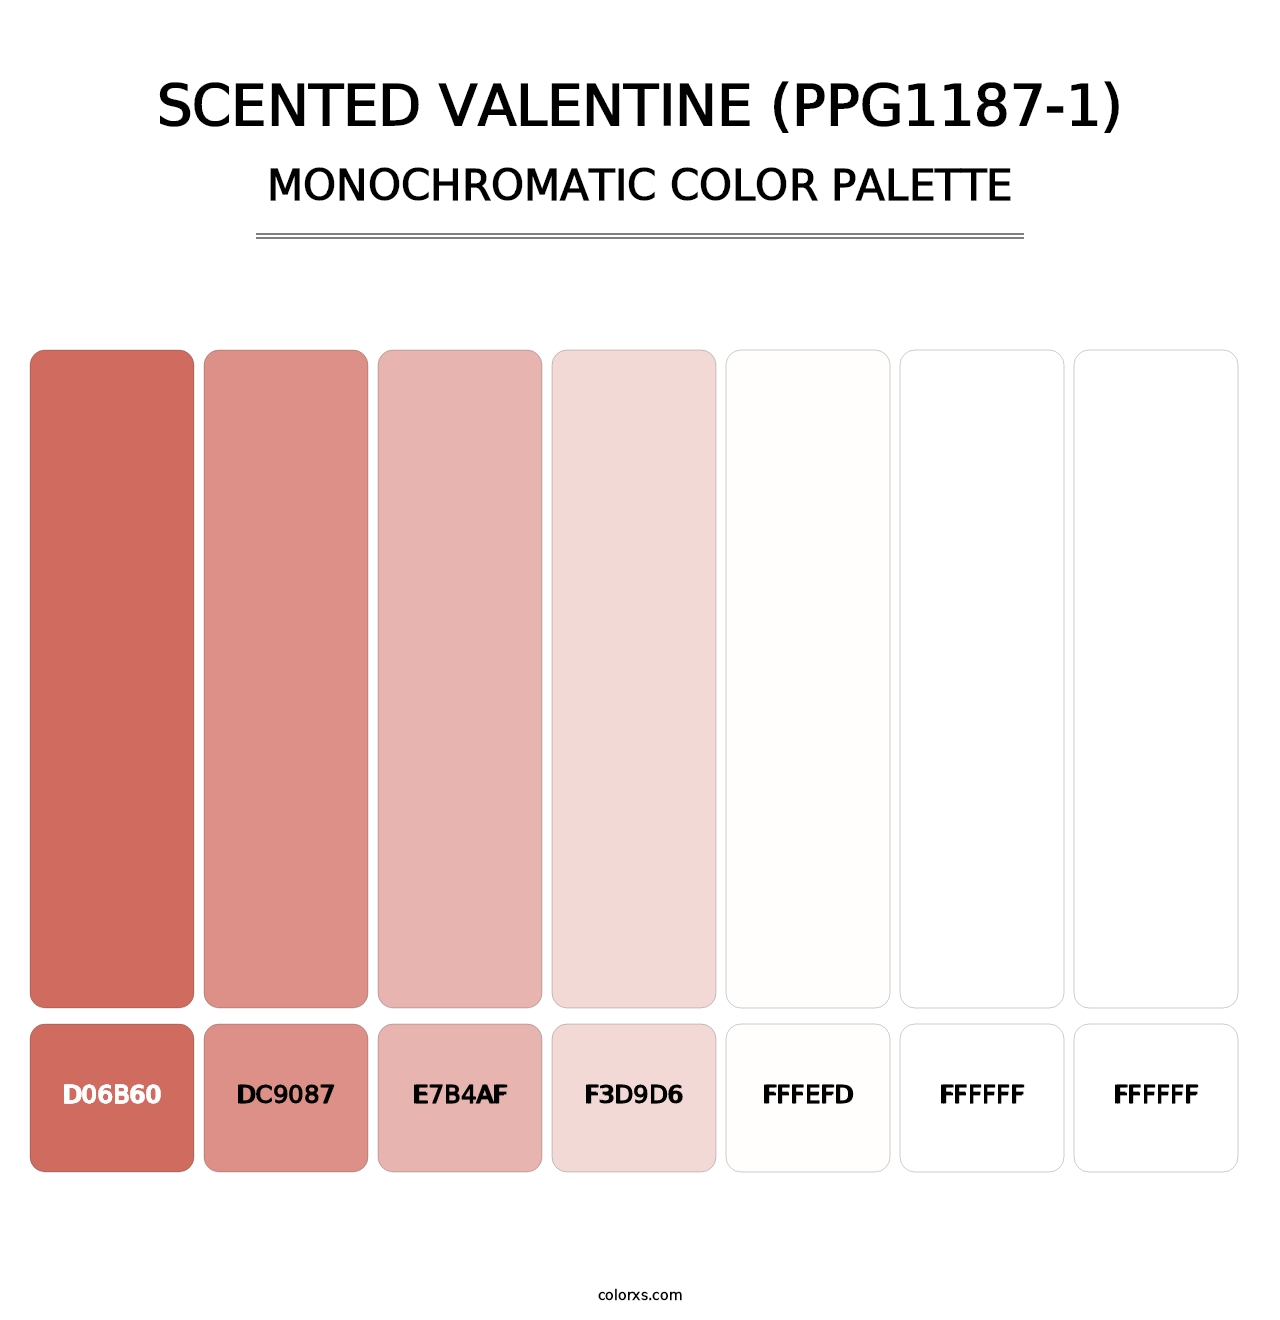 Scented Valentine (PPG1187-1) - Monochromatic Color Palette